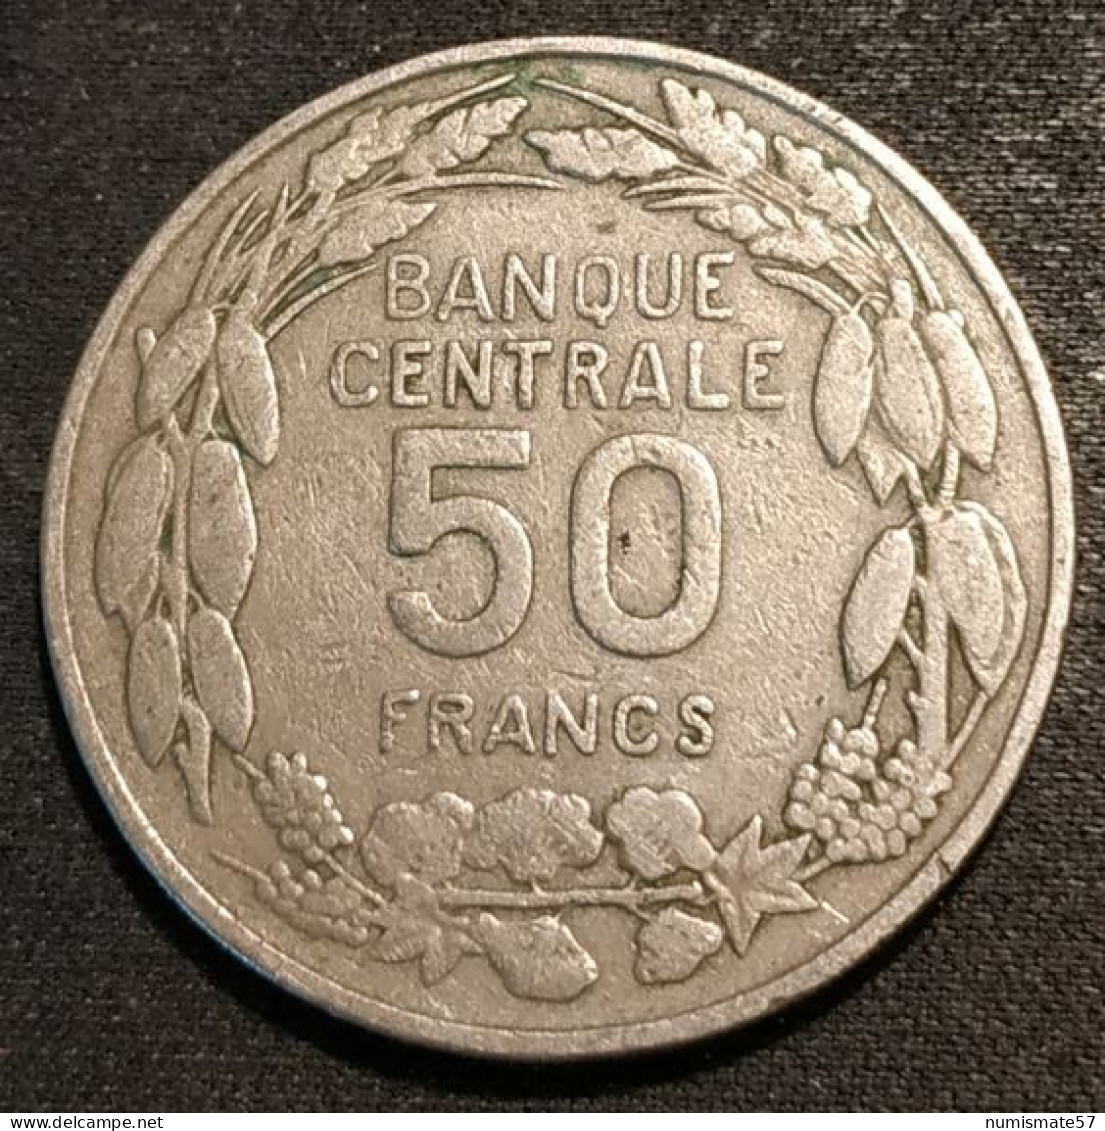 CAMEROUN - 50 FRANCS 1960 - KM 13 - ( 1er JANVIER 1960 - PAIX TRAVAIL PATRIE ) - Cameroun